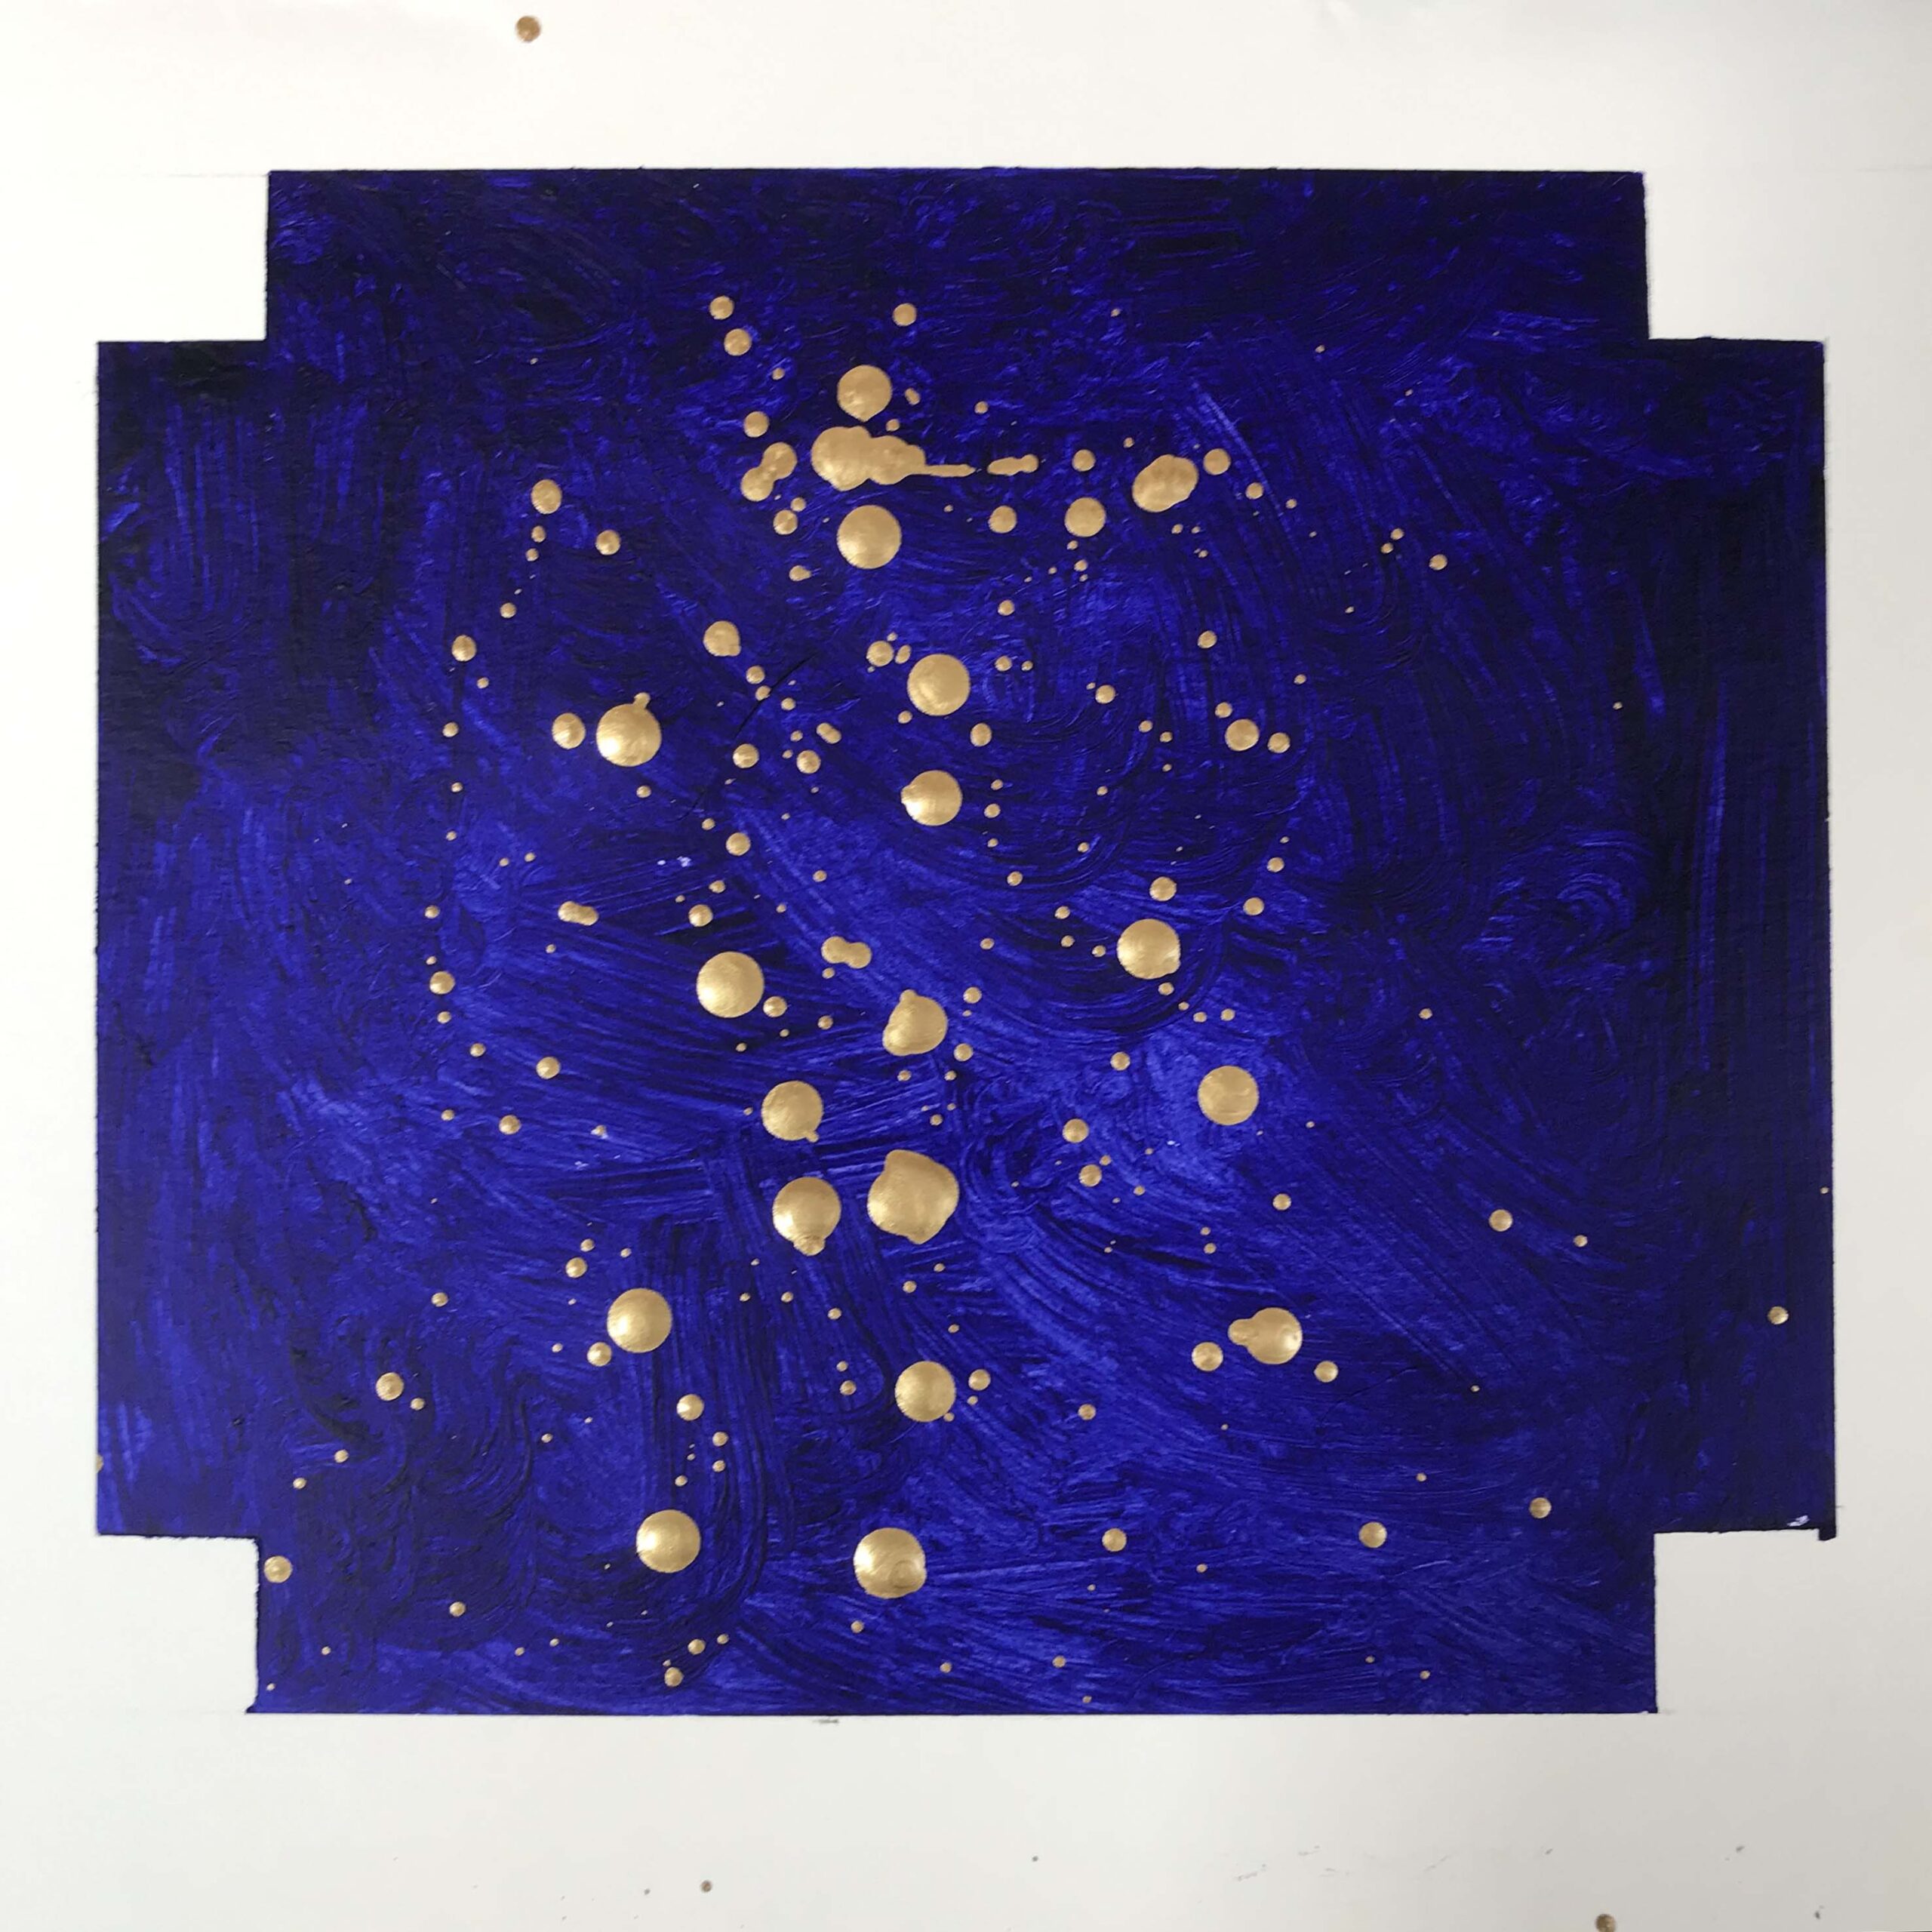 February 16, 2021 Webinar: Linda McCray –  “Abstract Art in Sacred Space”